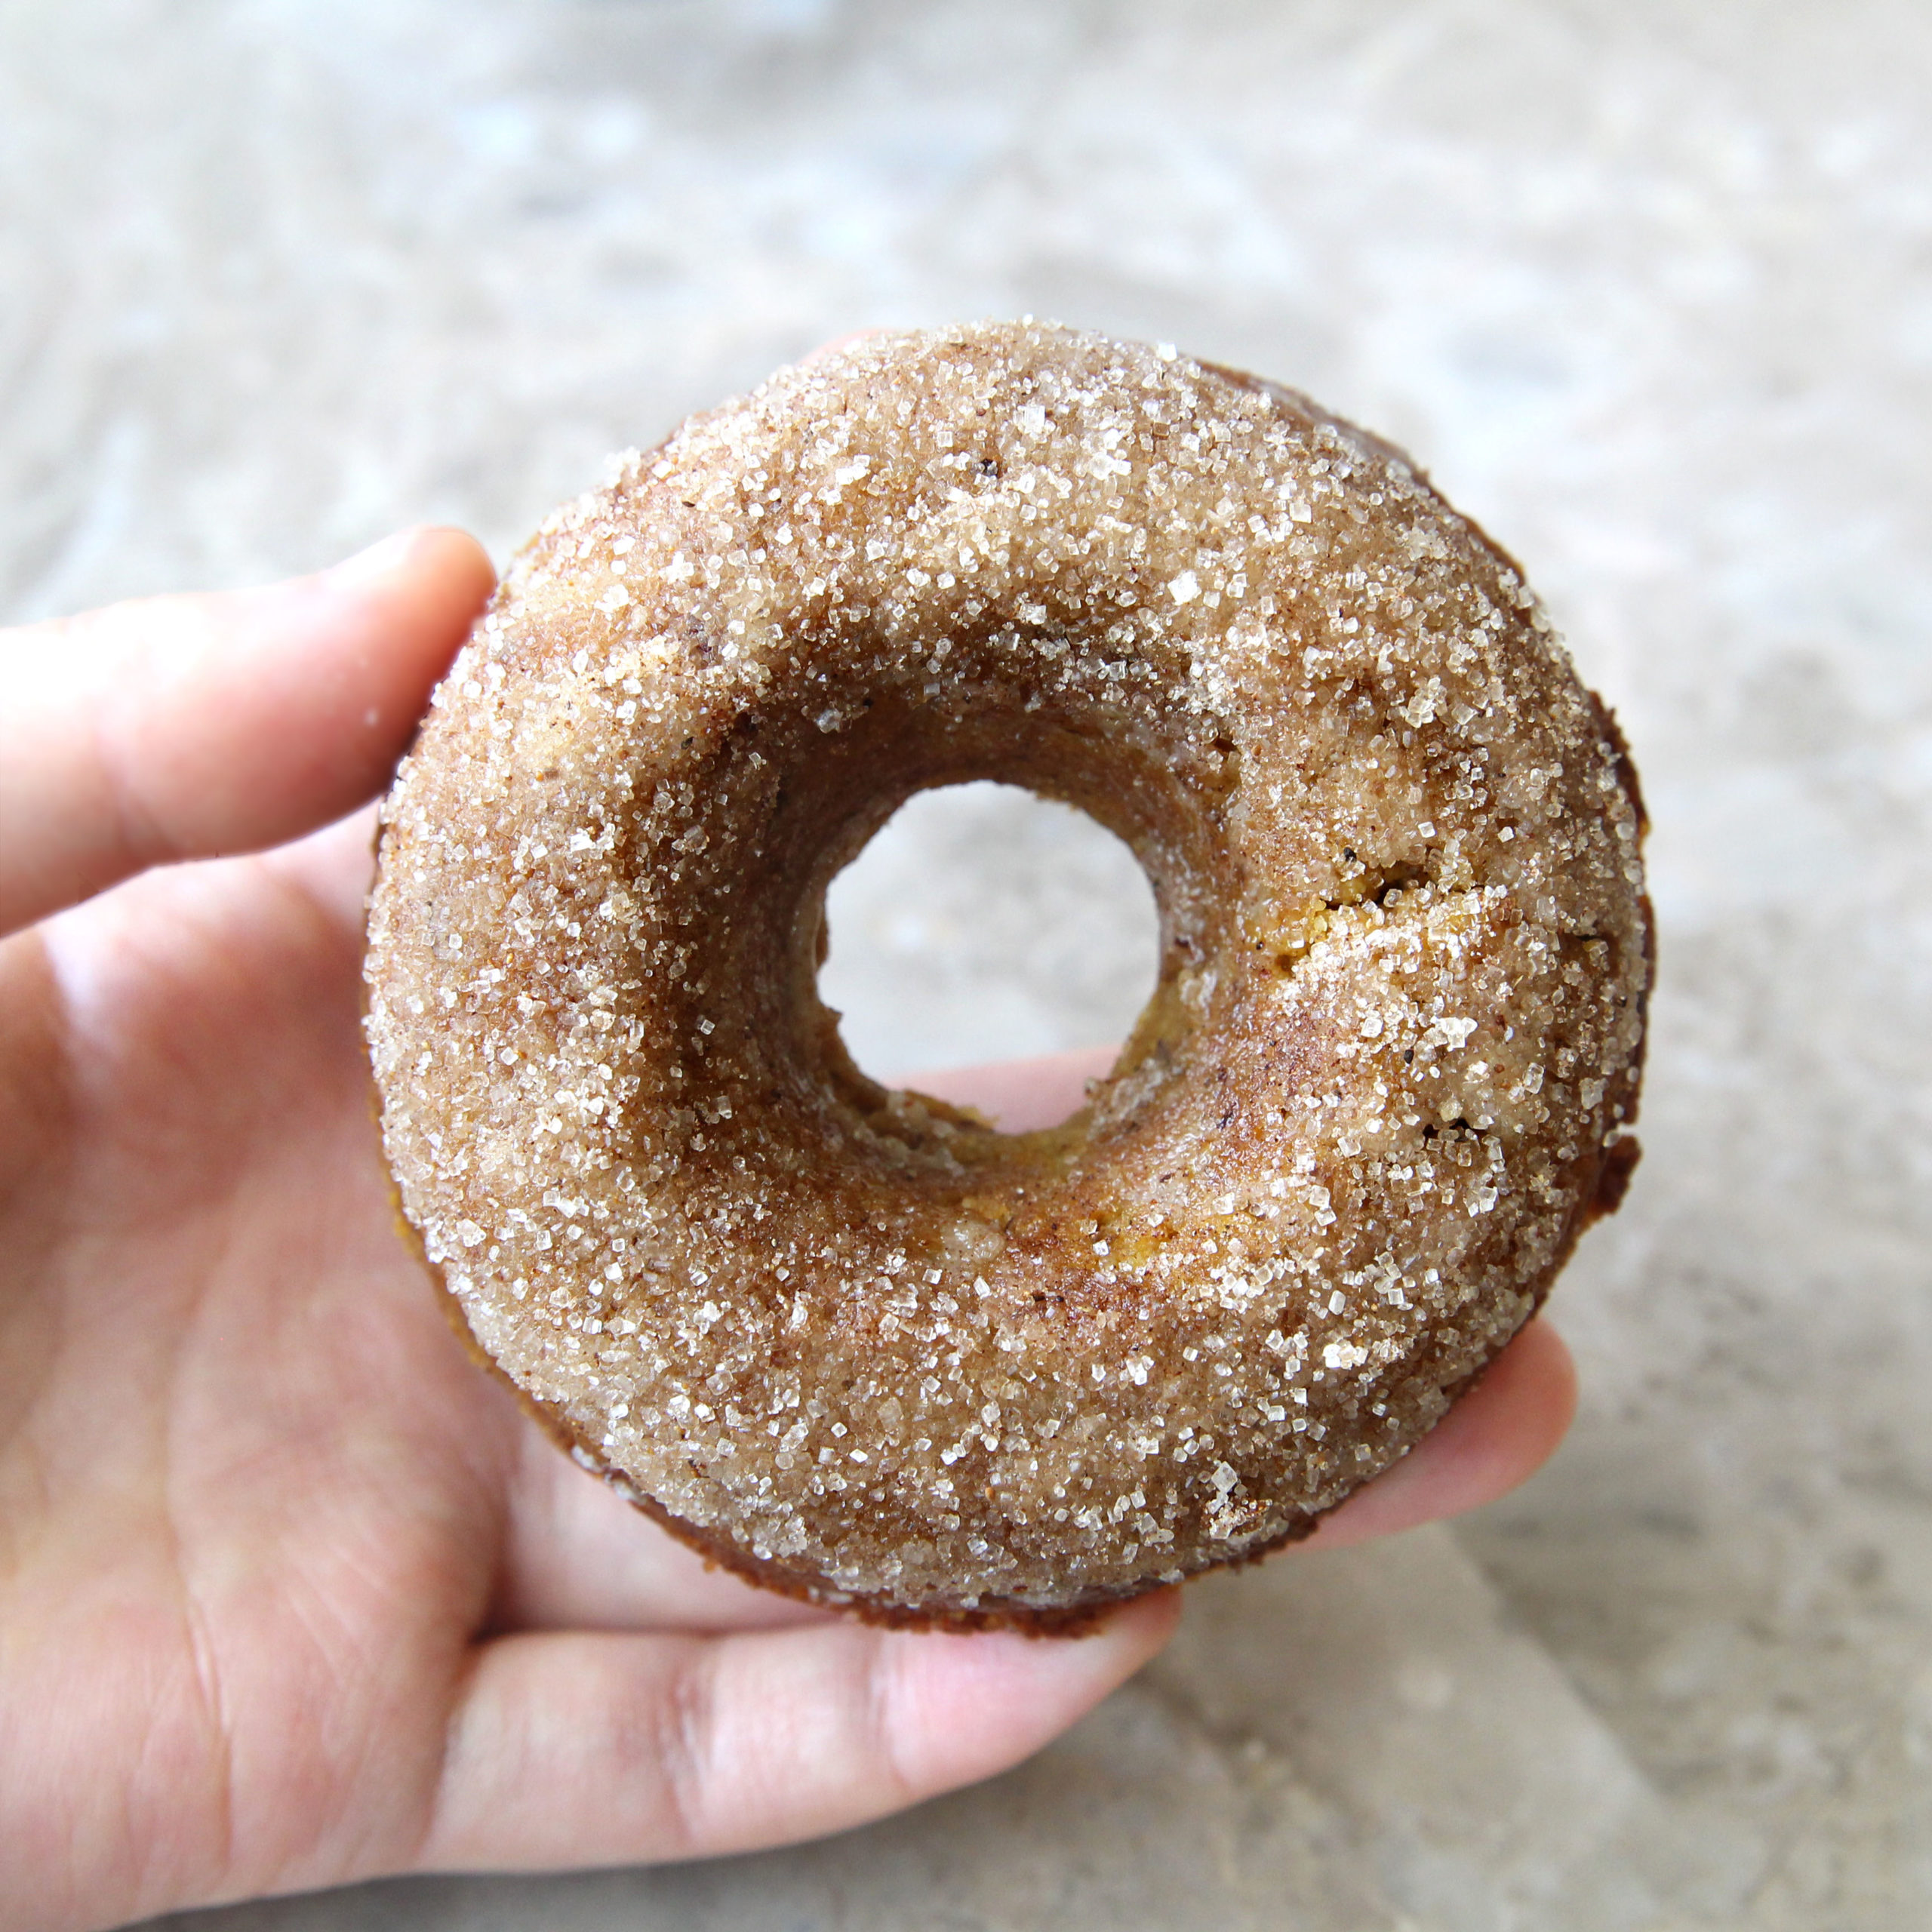 Gluten Free Cinnamon Sugar Pumpkin Donuts (Baked & Paleo-Friendly) - Sweet Potatoes in the Microwave